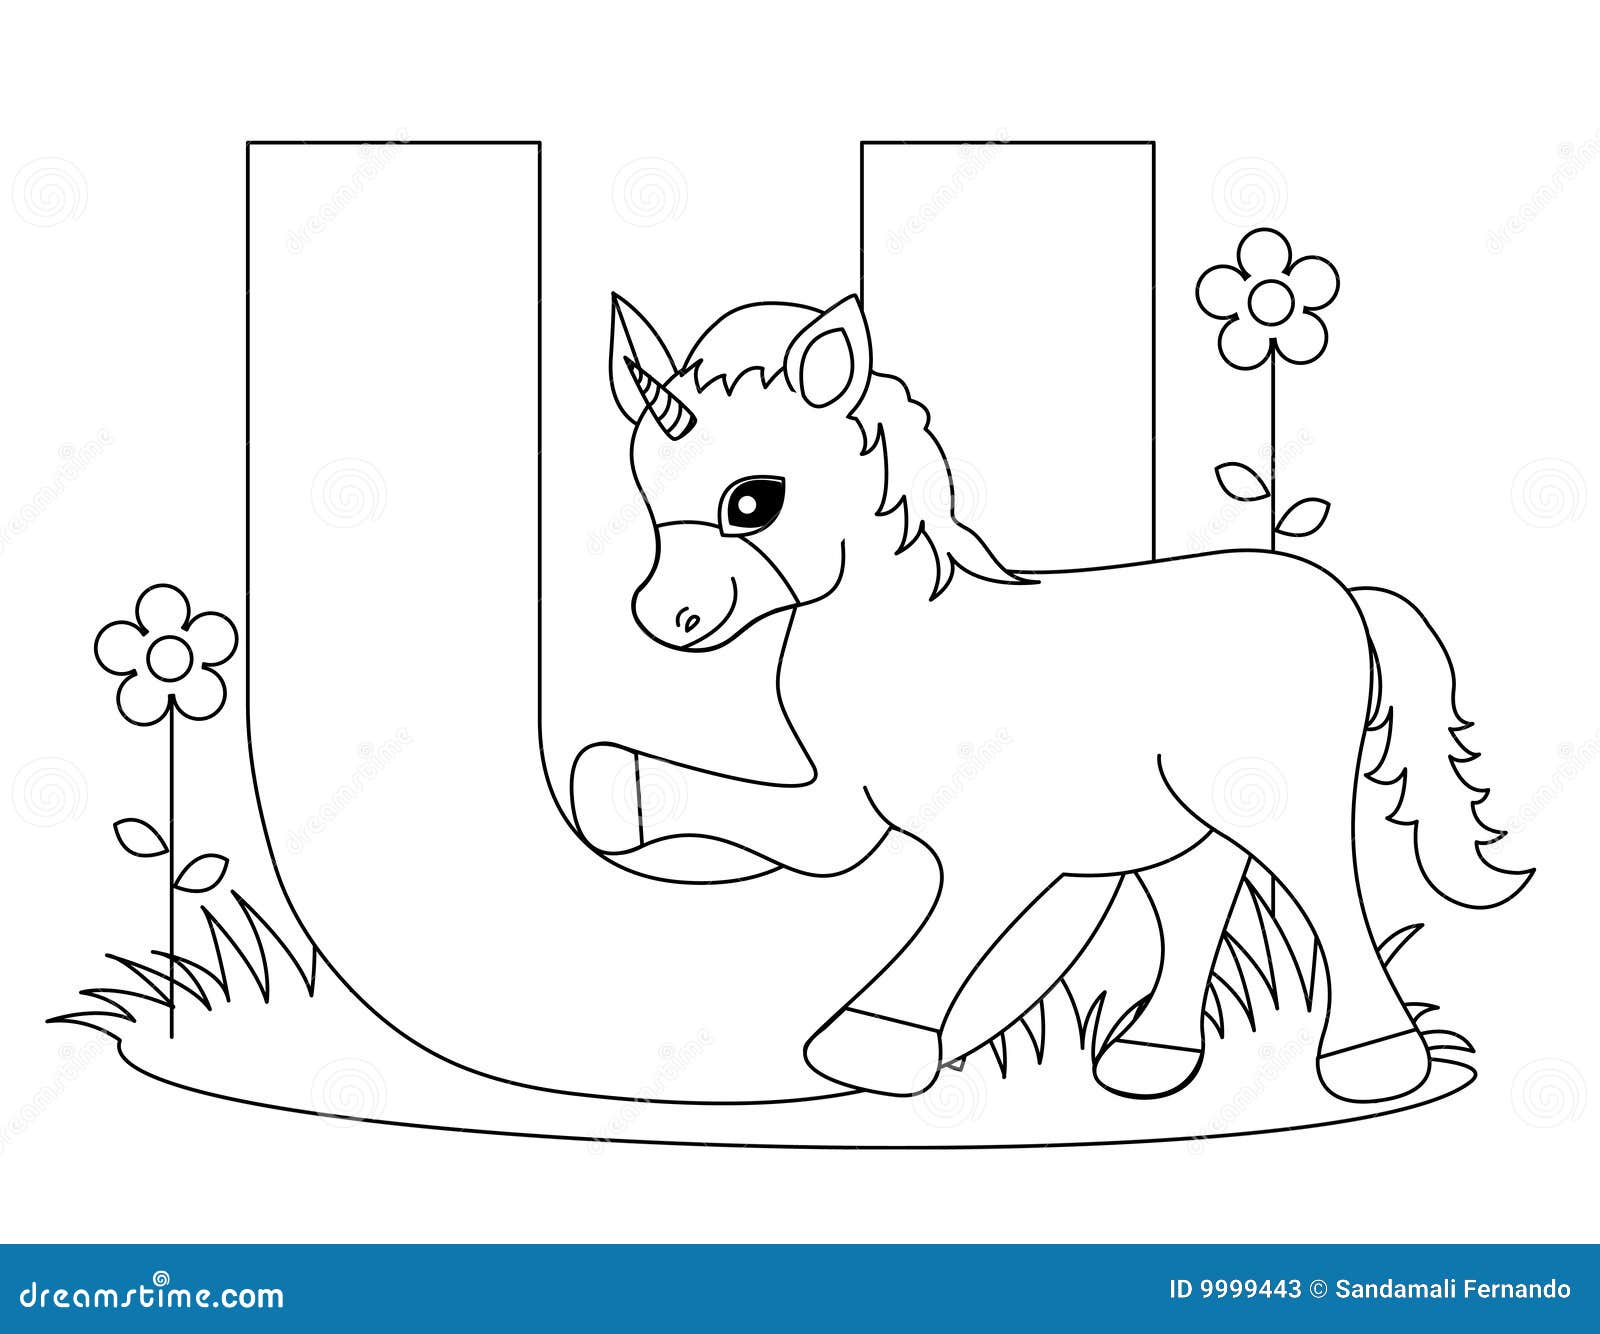 coloring alphabet animal letter unicorn illustration isolated graphic background cute